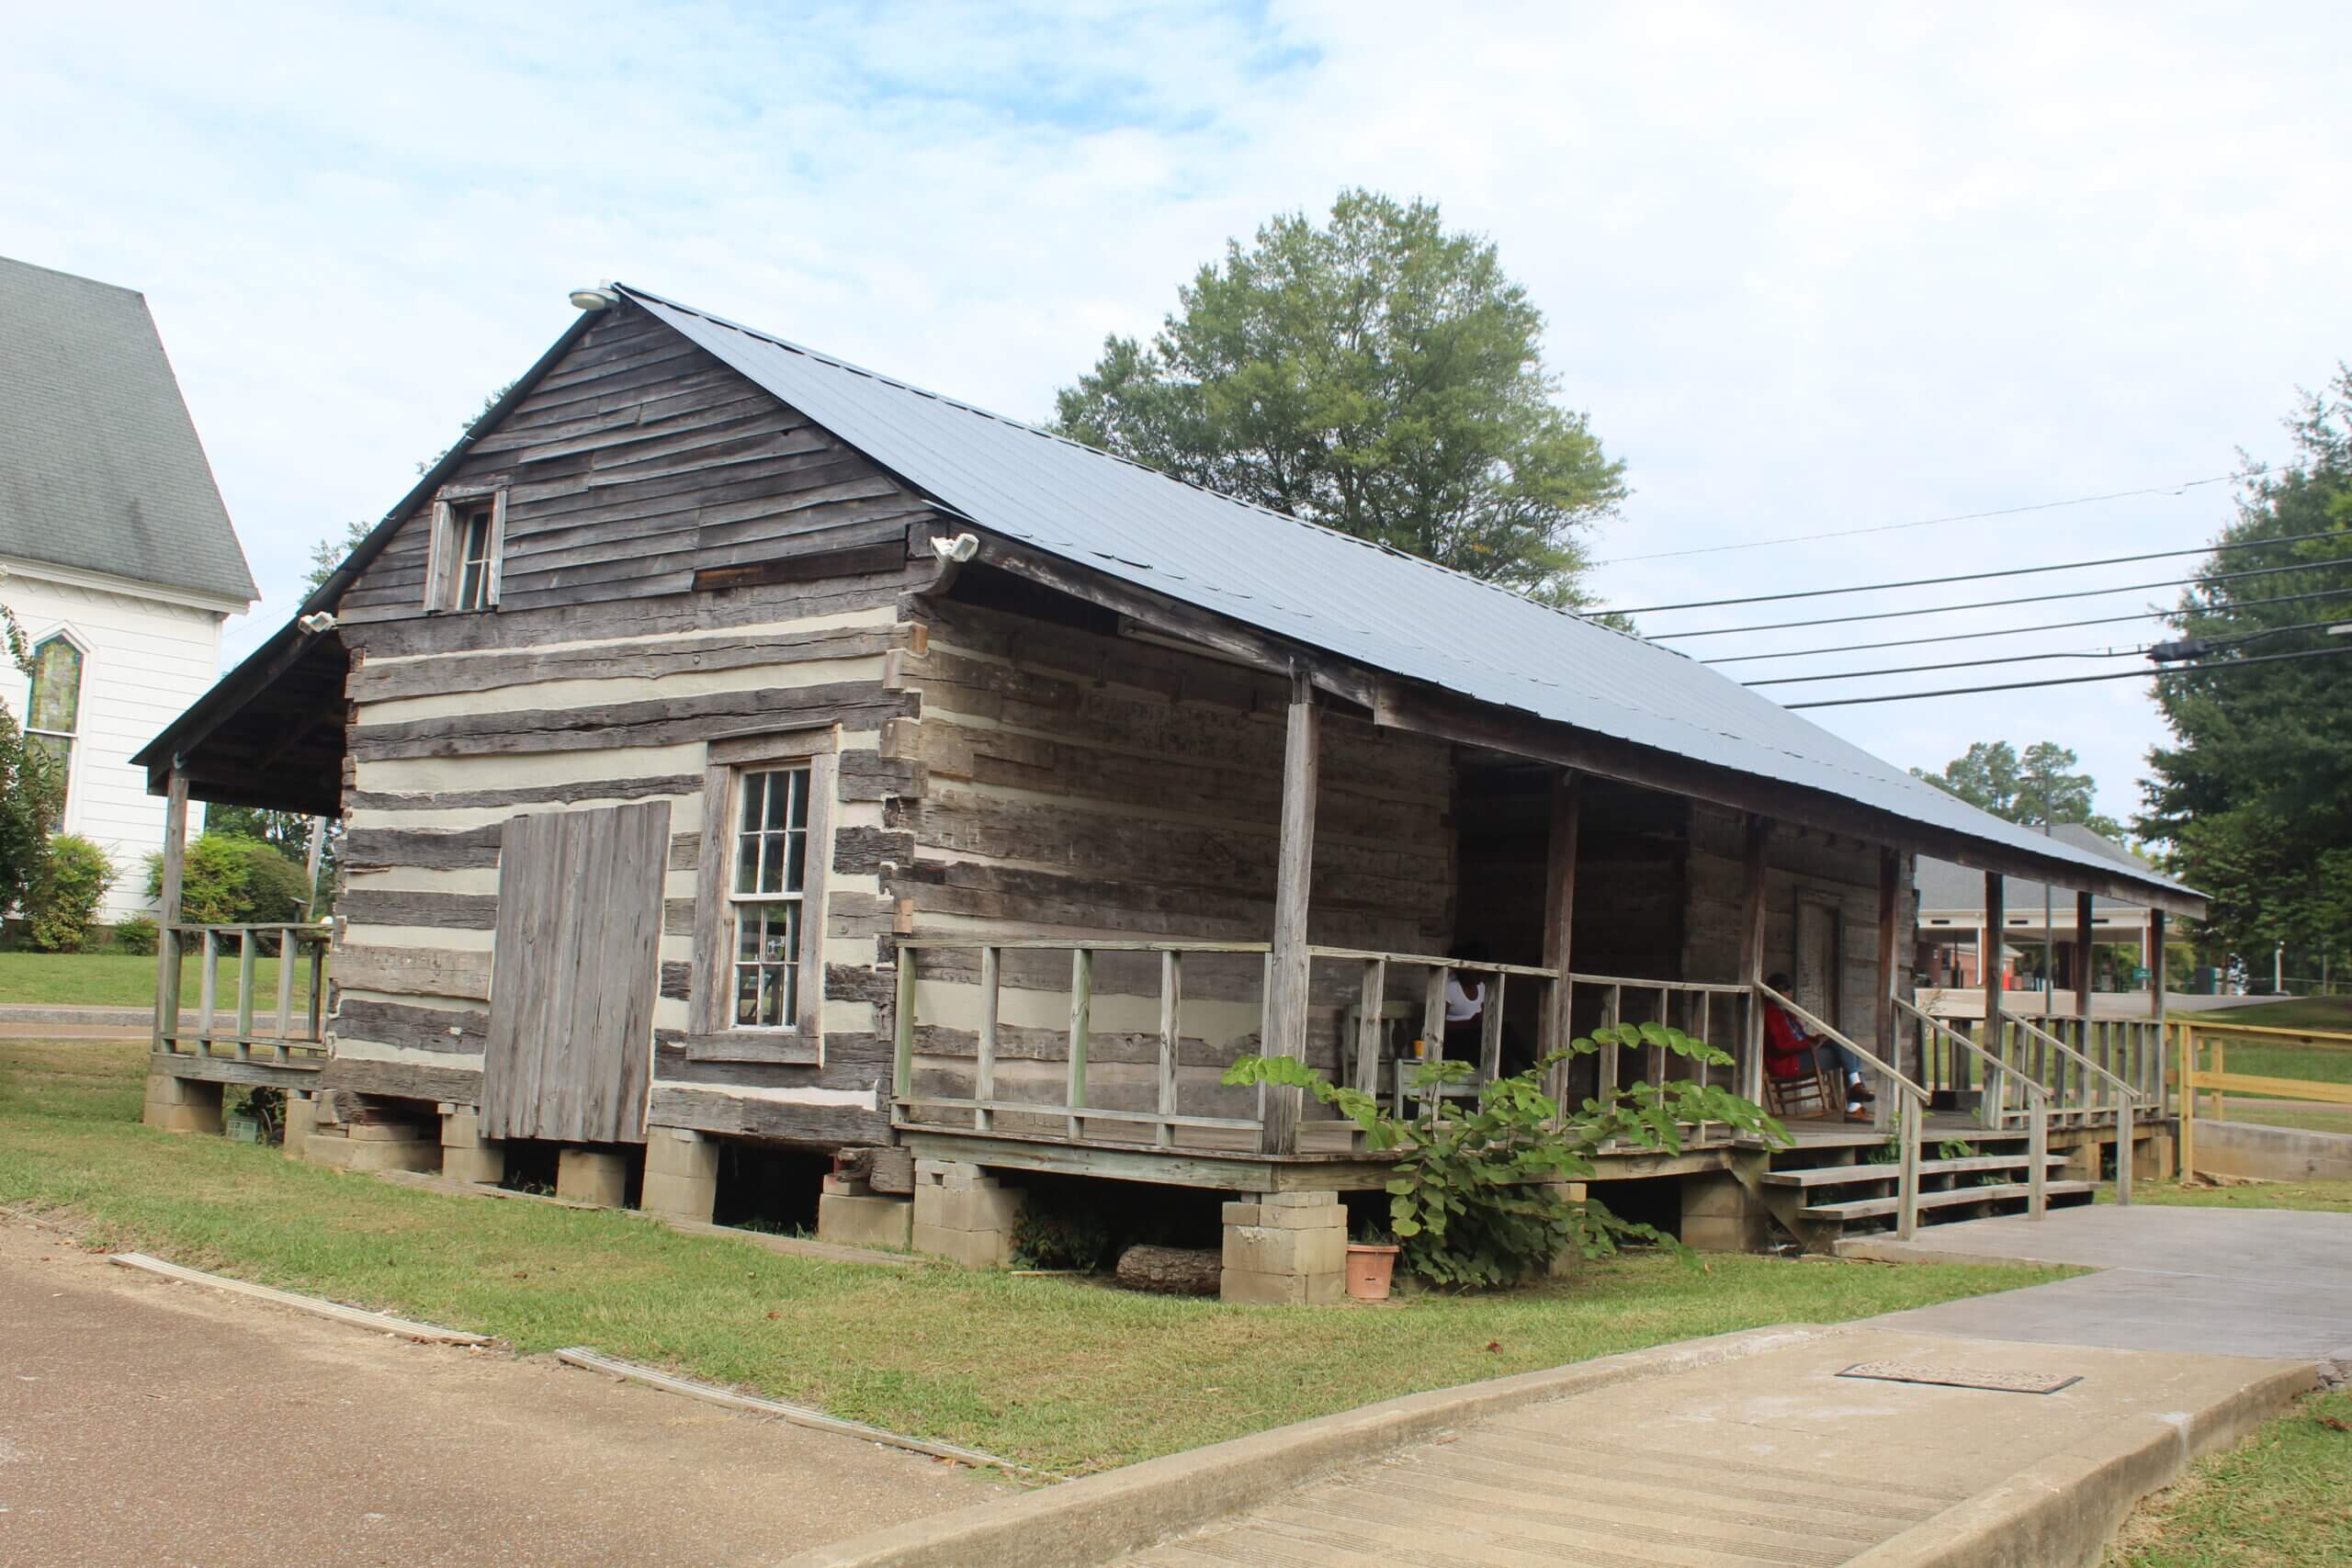 Future plans for historic cabin